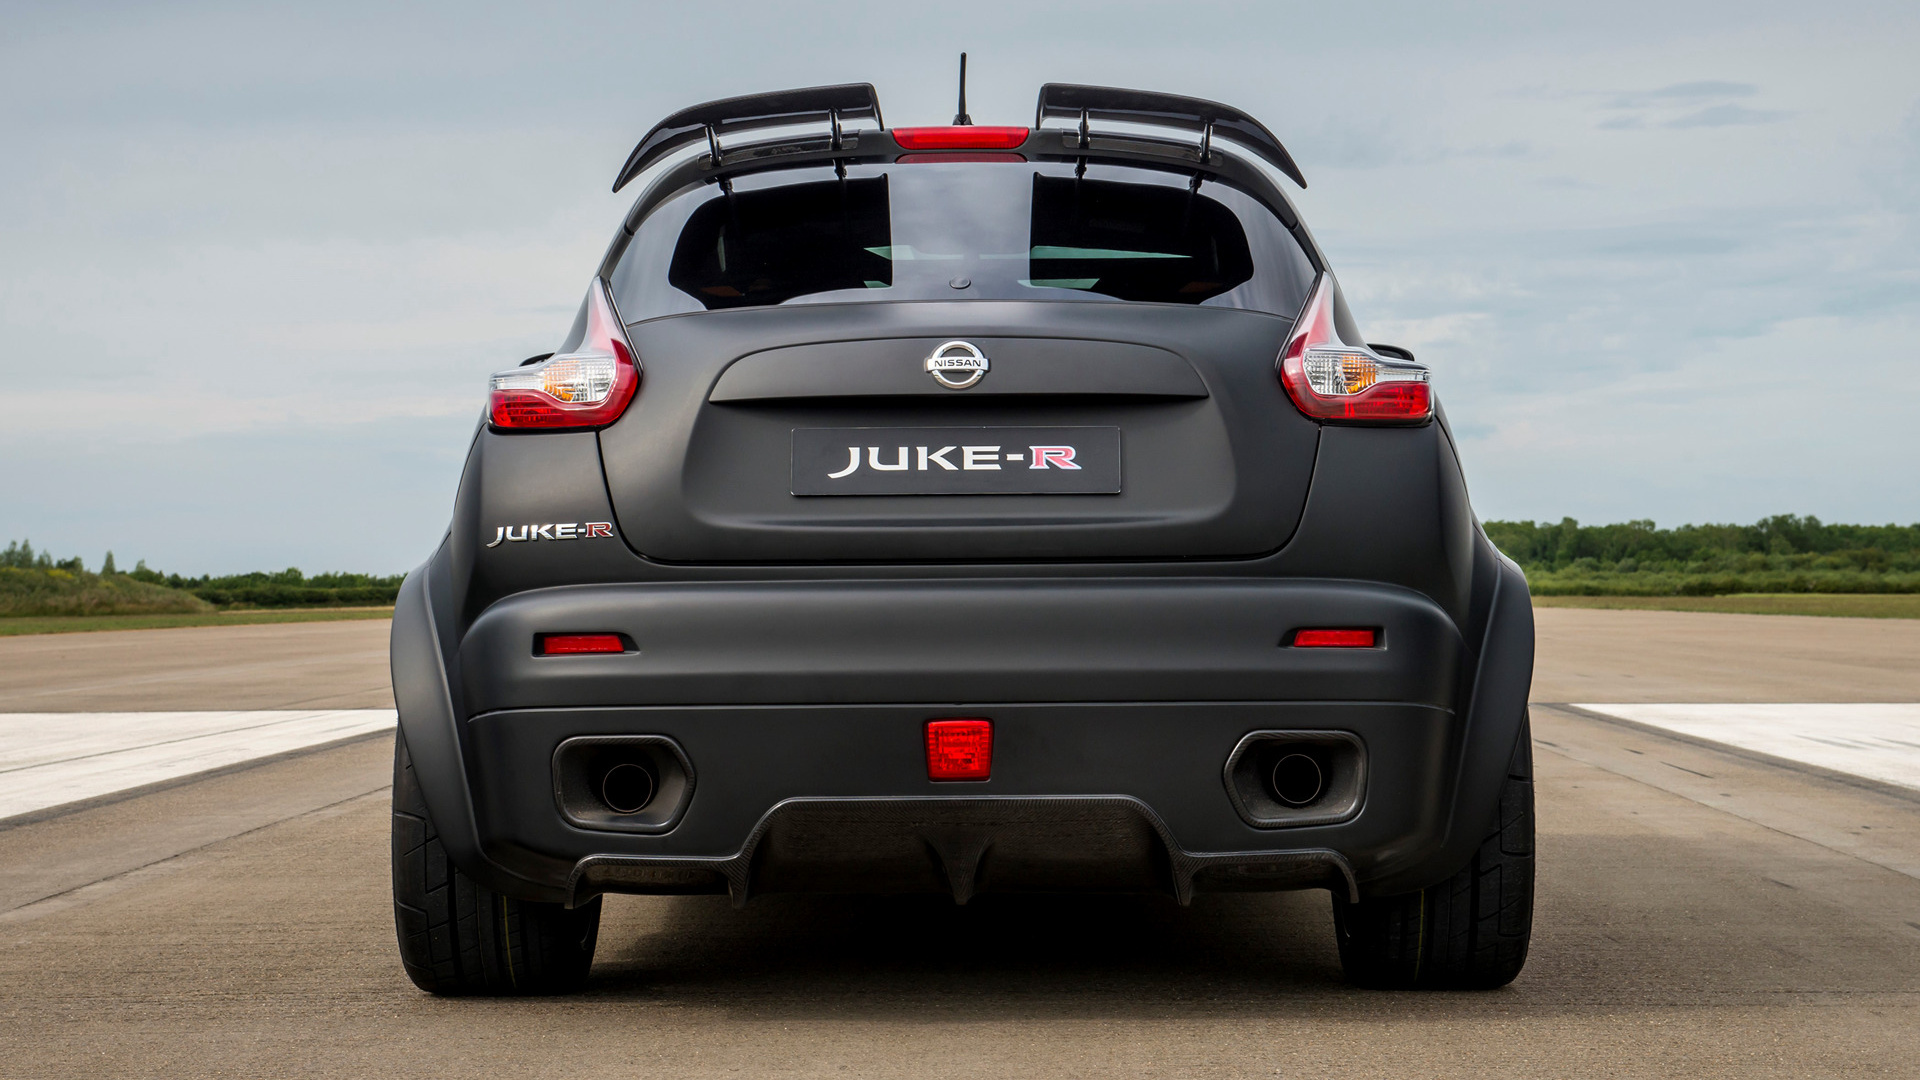 2015 Nissan Juke R 2 0 Concept